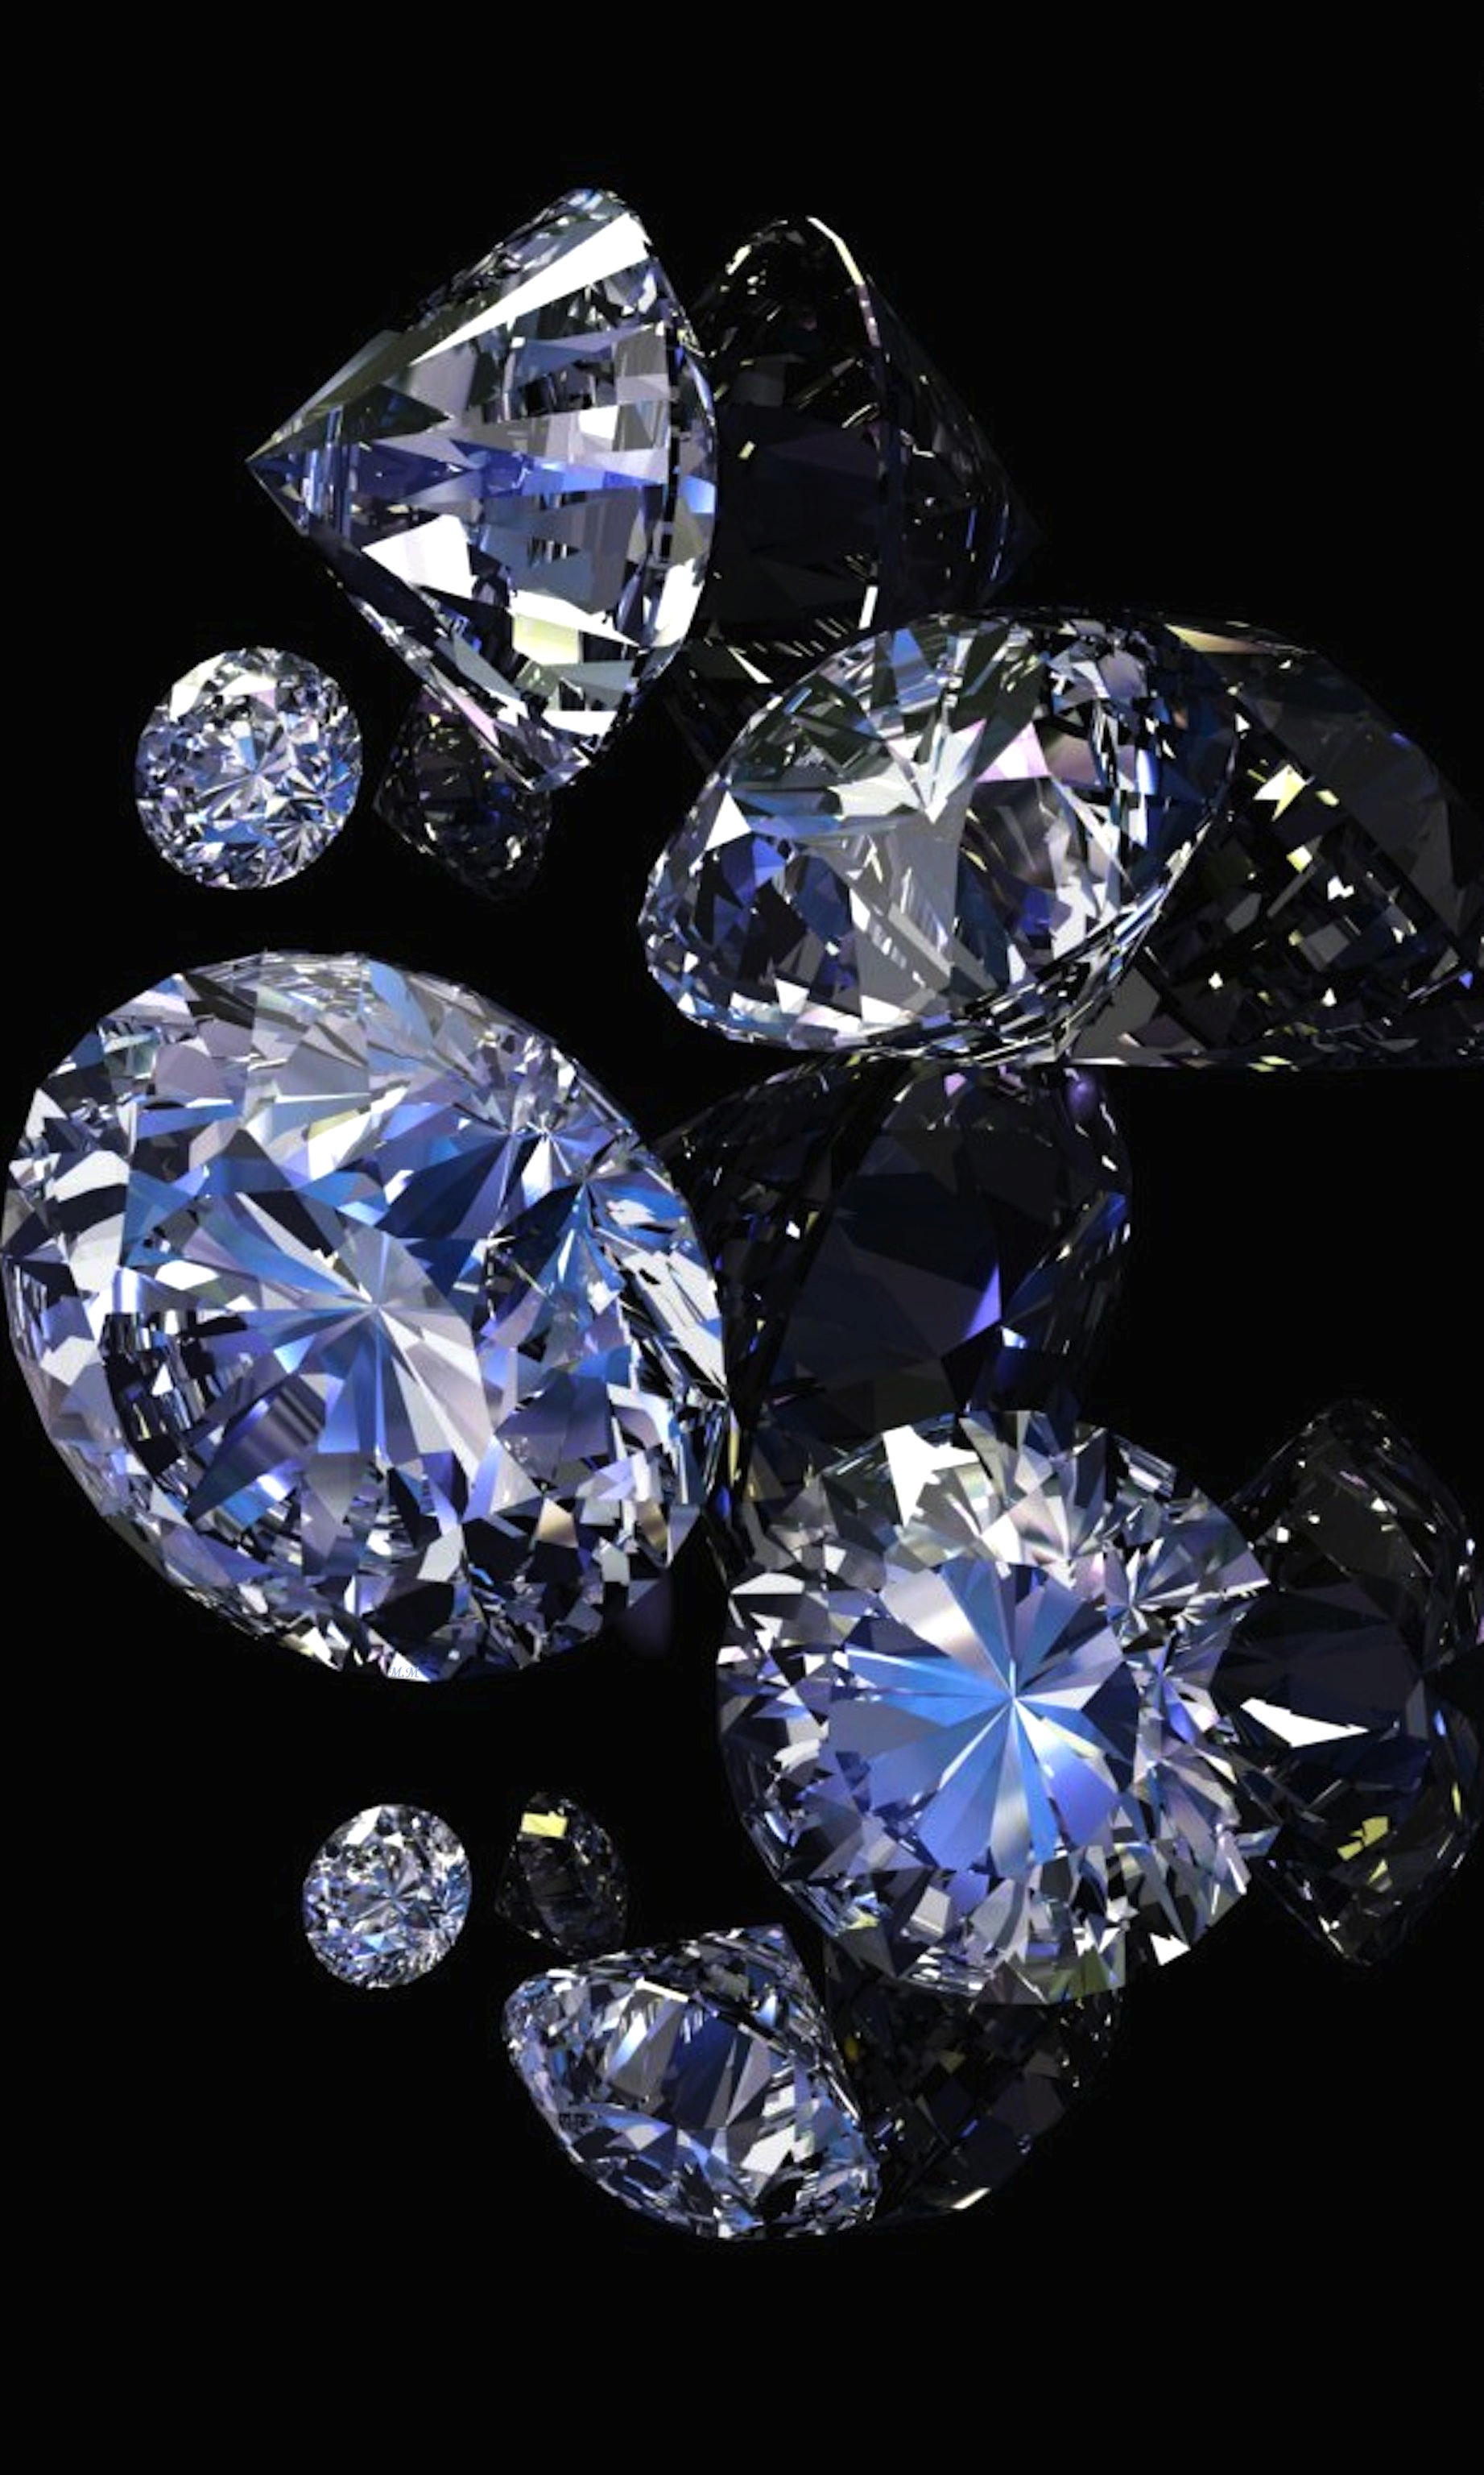 fond d'écran diamant iphone,bleu,diamant,gemme,bleu cobalt,cristal